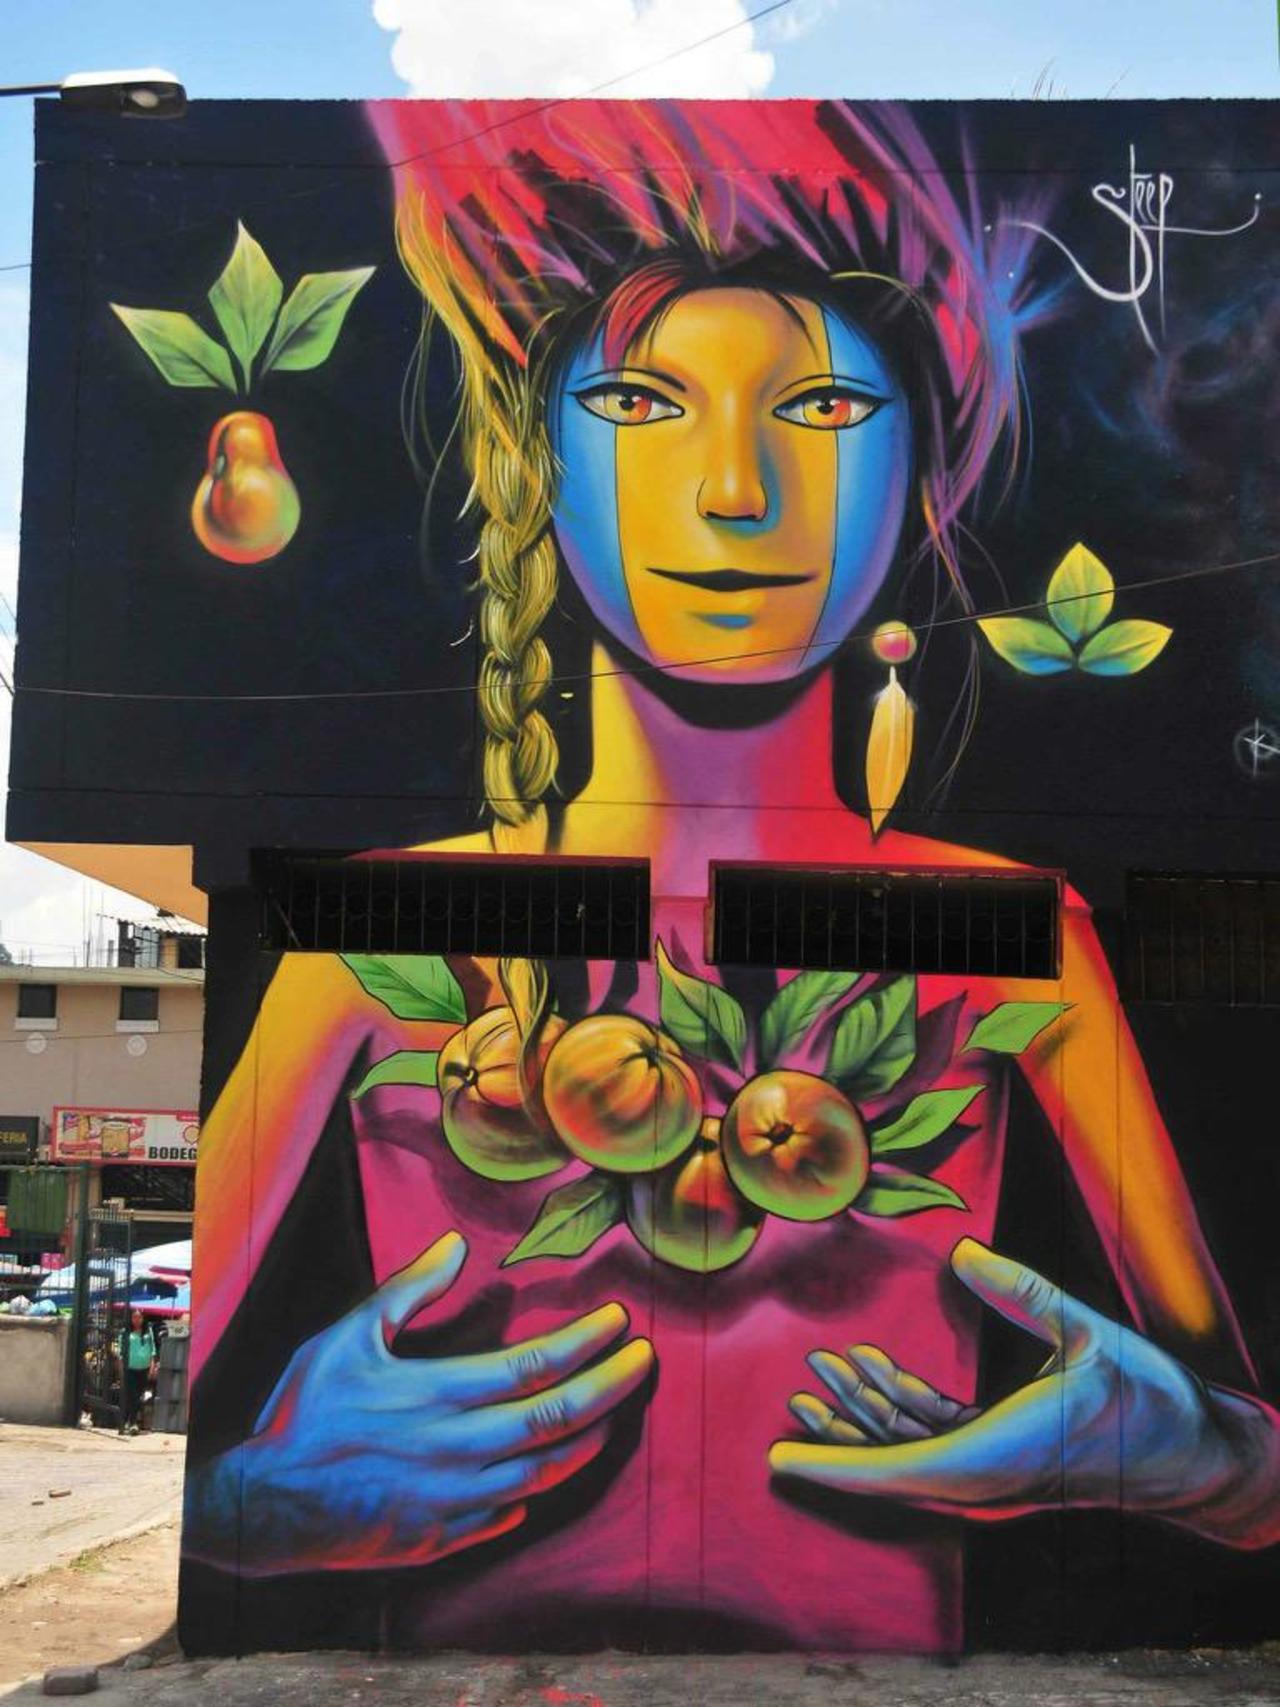 Street Art by Steep

#art #graffiti #mural #streetart http://t.co/dKGIfl0HiR http://twitter.com/GoogleStreetArt/status/652717552435638272/photo/1/large?utm_source=fb&utm_medium=fb&utm_campaign=charlesjackso14&utm_content=652720469402103808 … … http://twitter.com/GoogleStreetArt/status/652717552435638272/photo/1/large?utm_source=fb&utm_medium=fb&utm_campaign=charlesjackso14&utm_content=652720629431537664